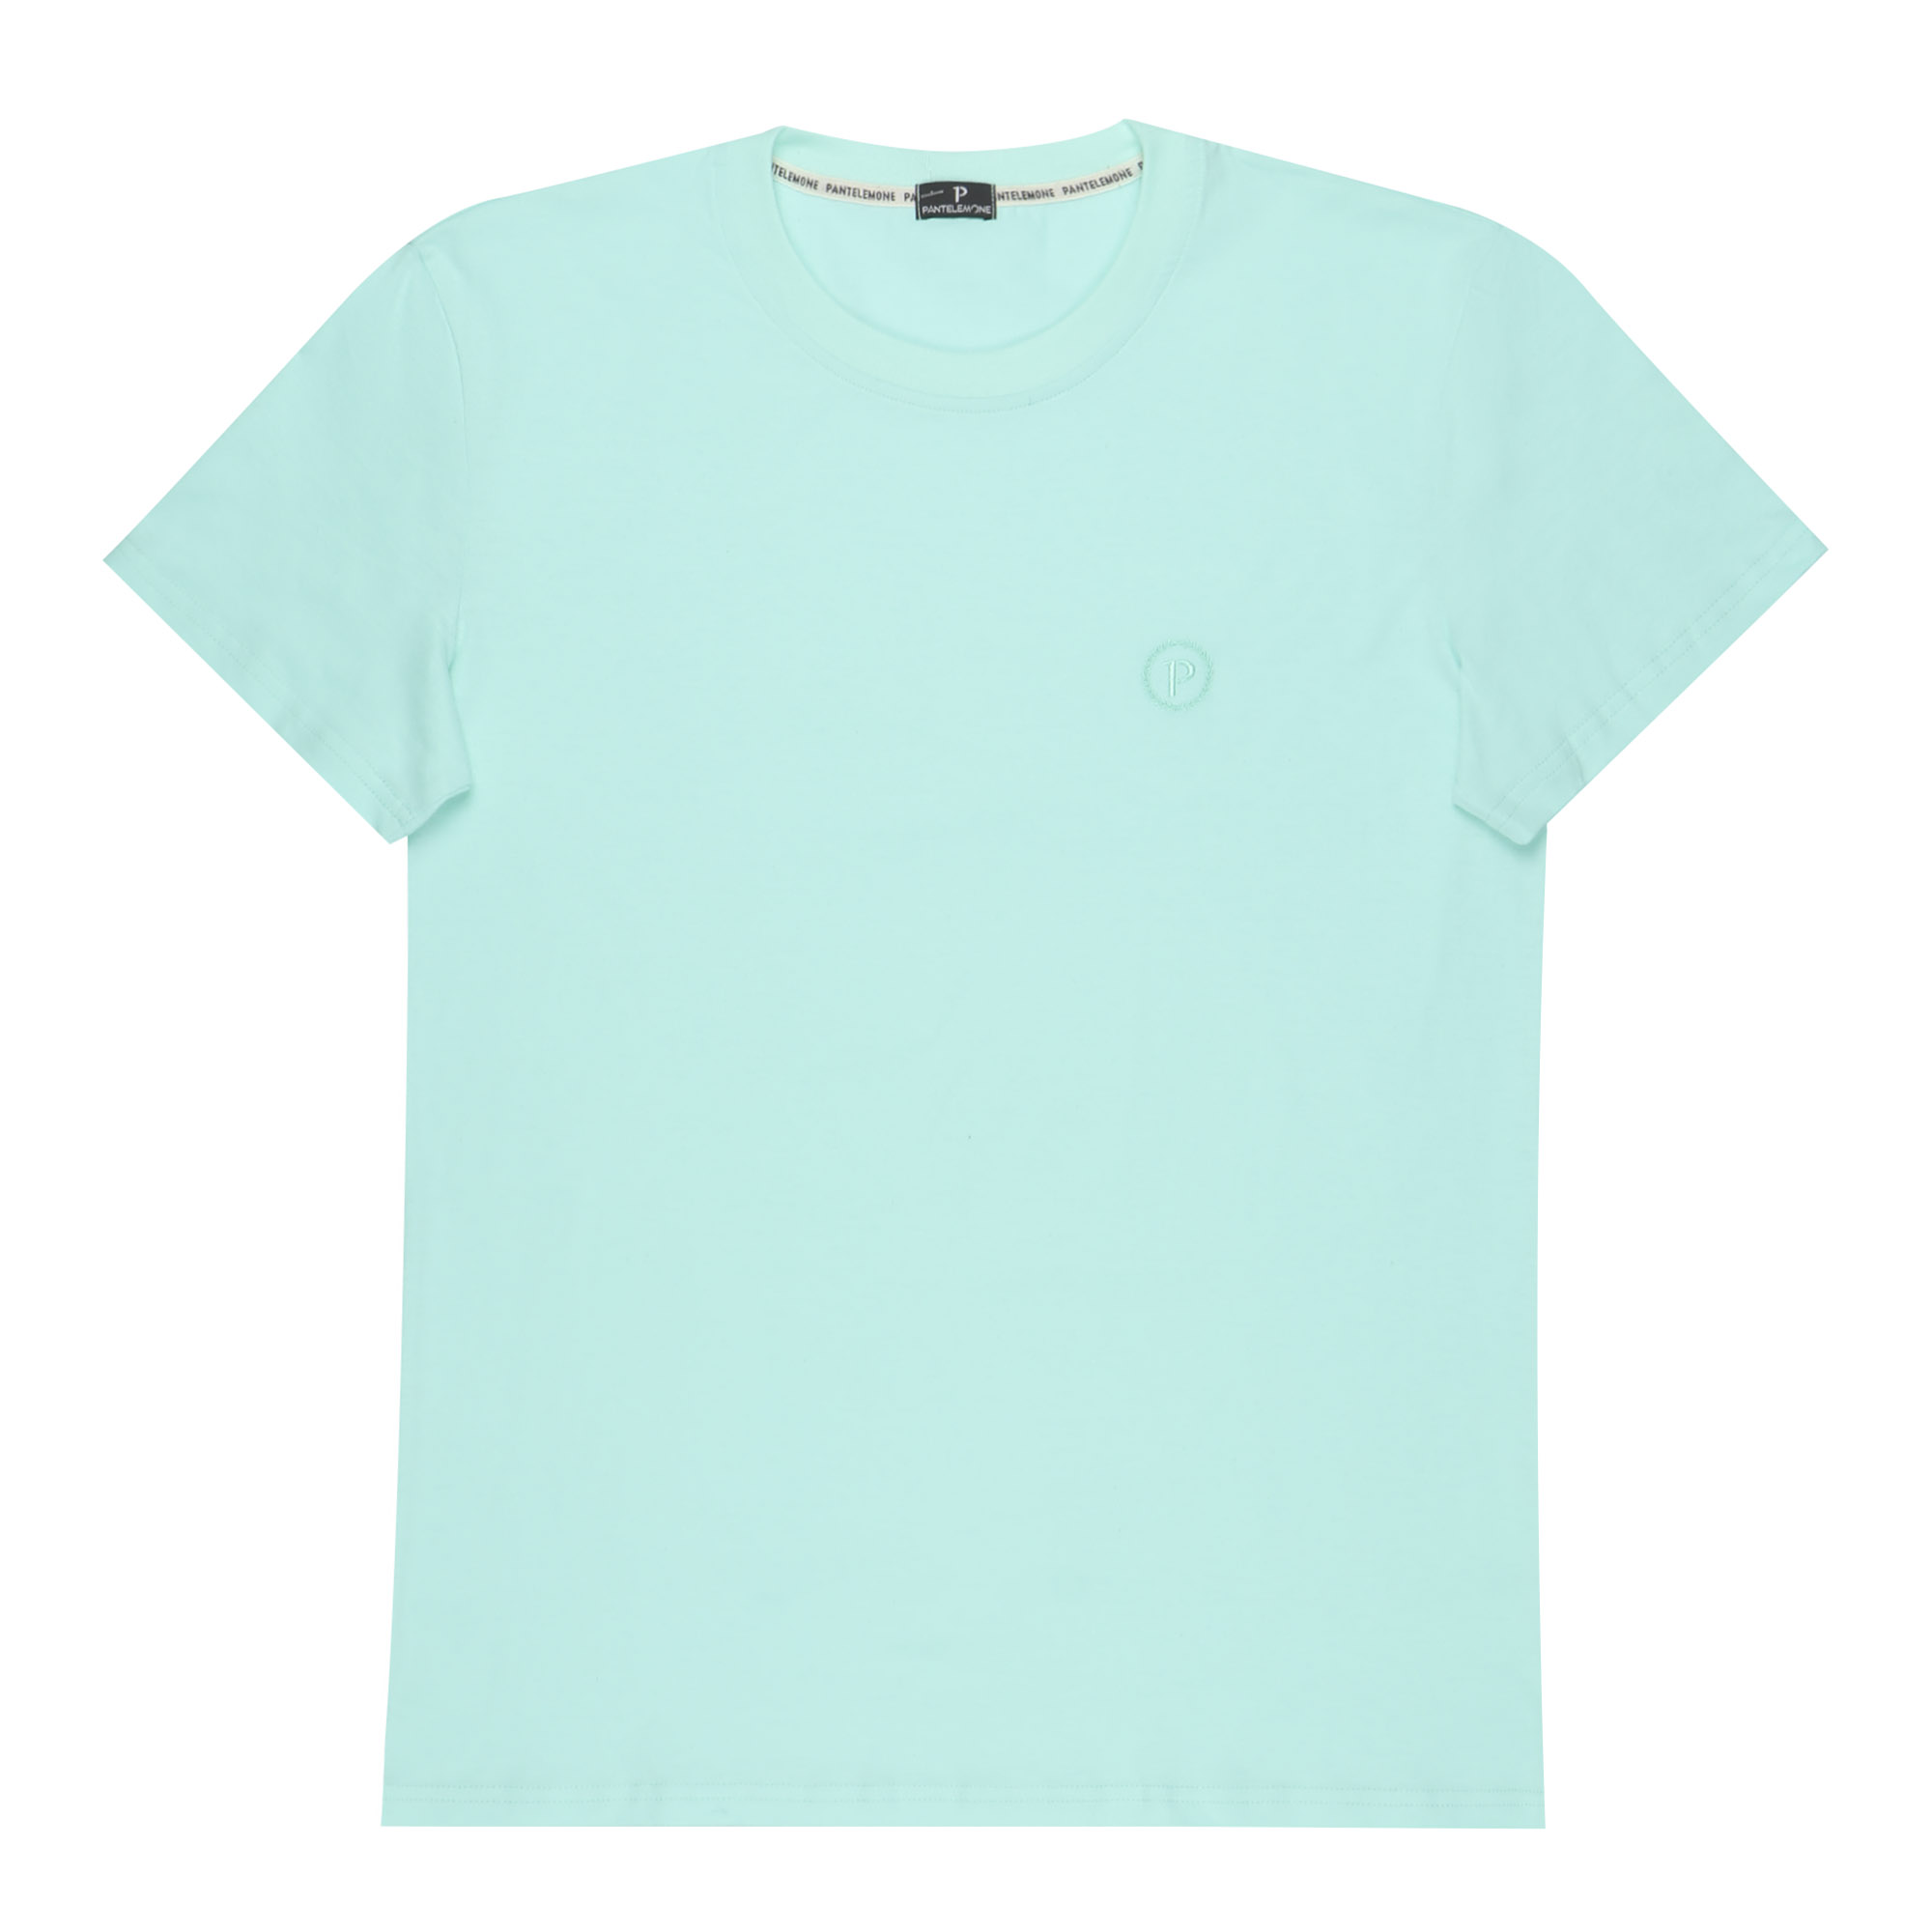 Мужская футболка Pantelemone MF-913 54 ментоловая, цвет ментоловый, размер 54 - фото 1